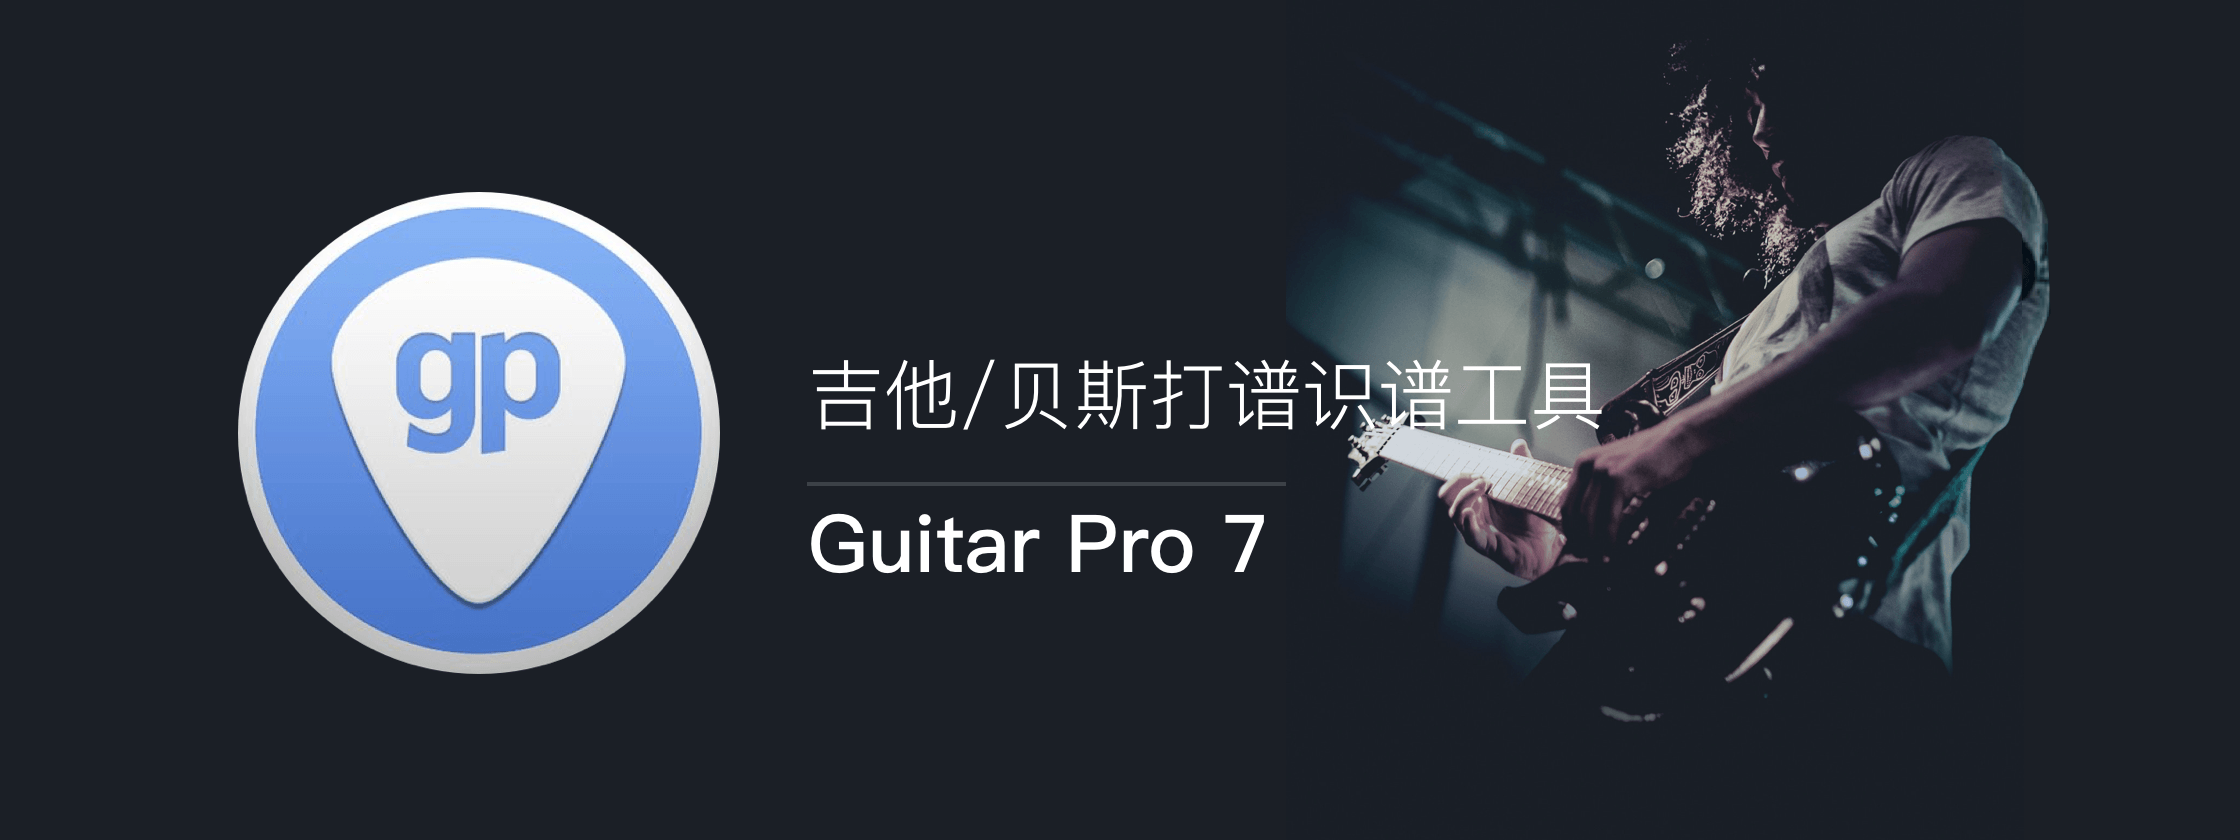 Guitar Pro 7 – 吉他/贝斯打谱识谱工具